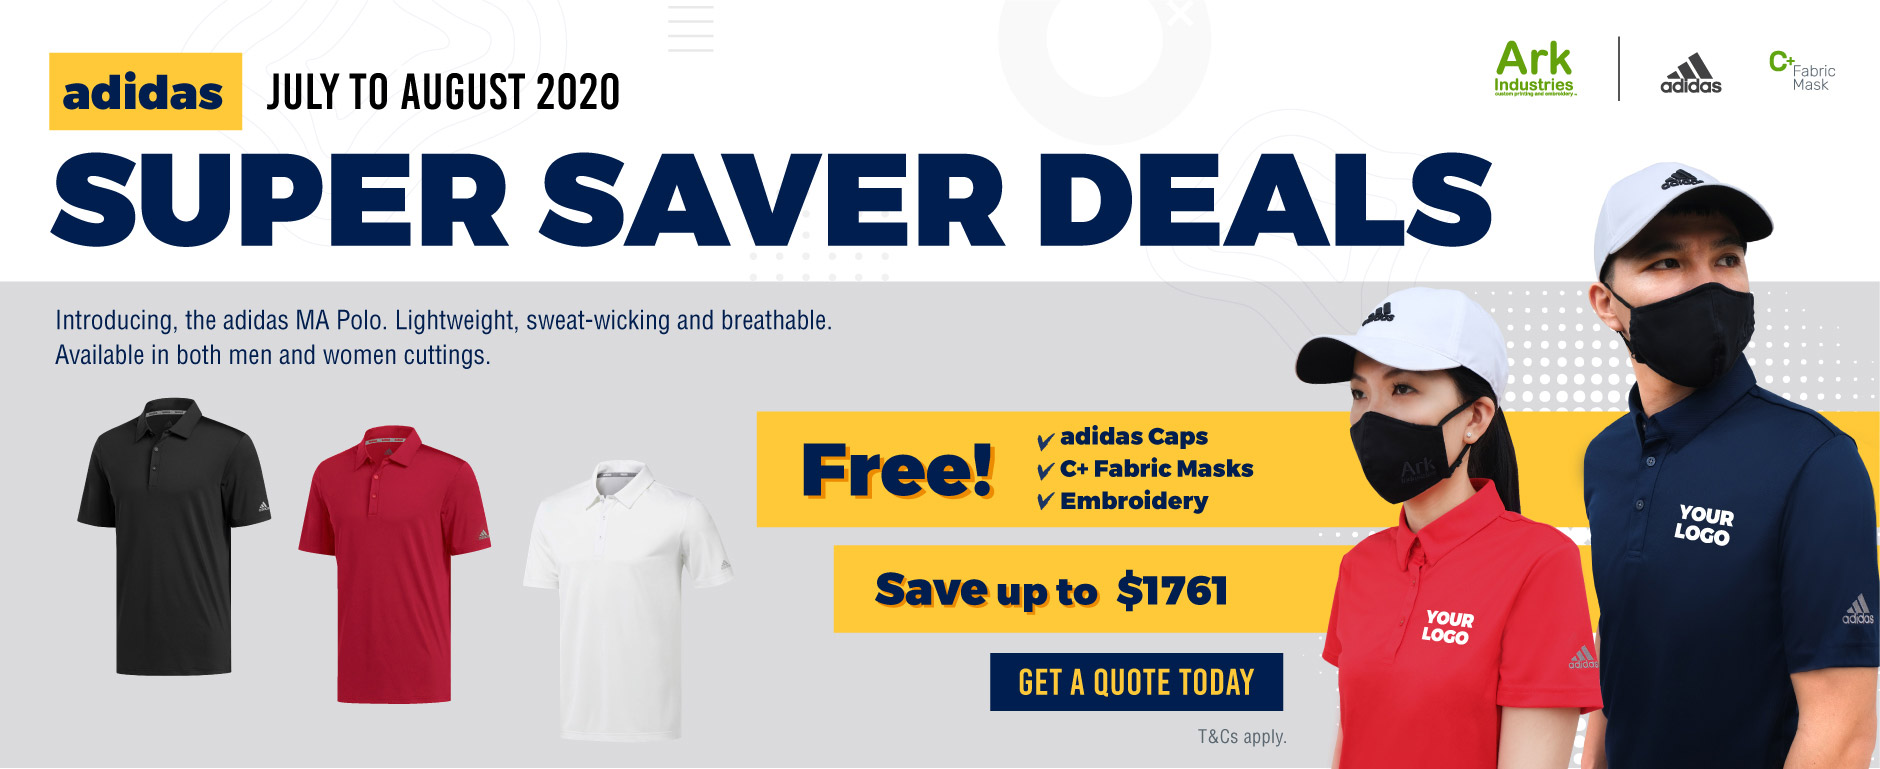 adidas Super Saver Deals - adidas MA Polos - Ark Industries